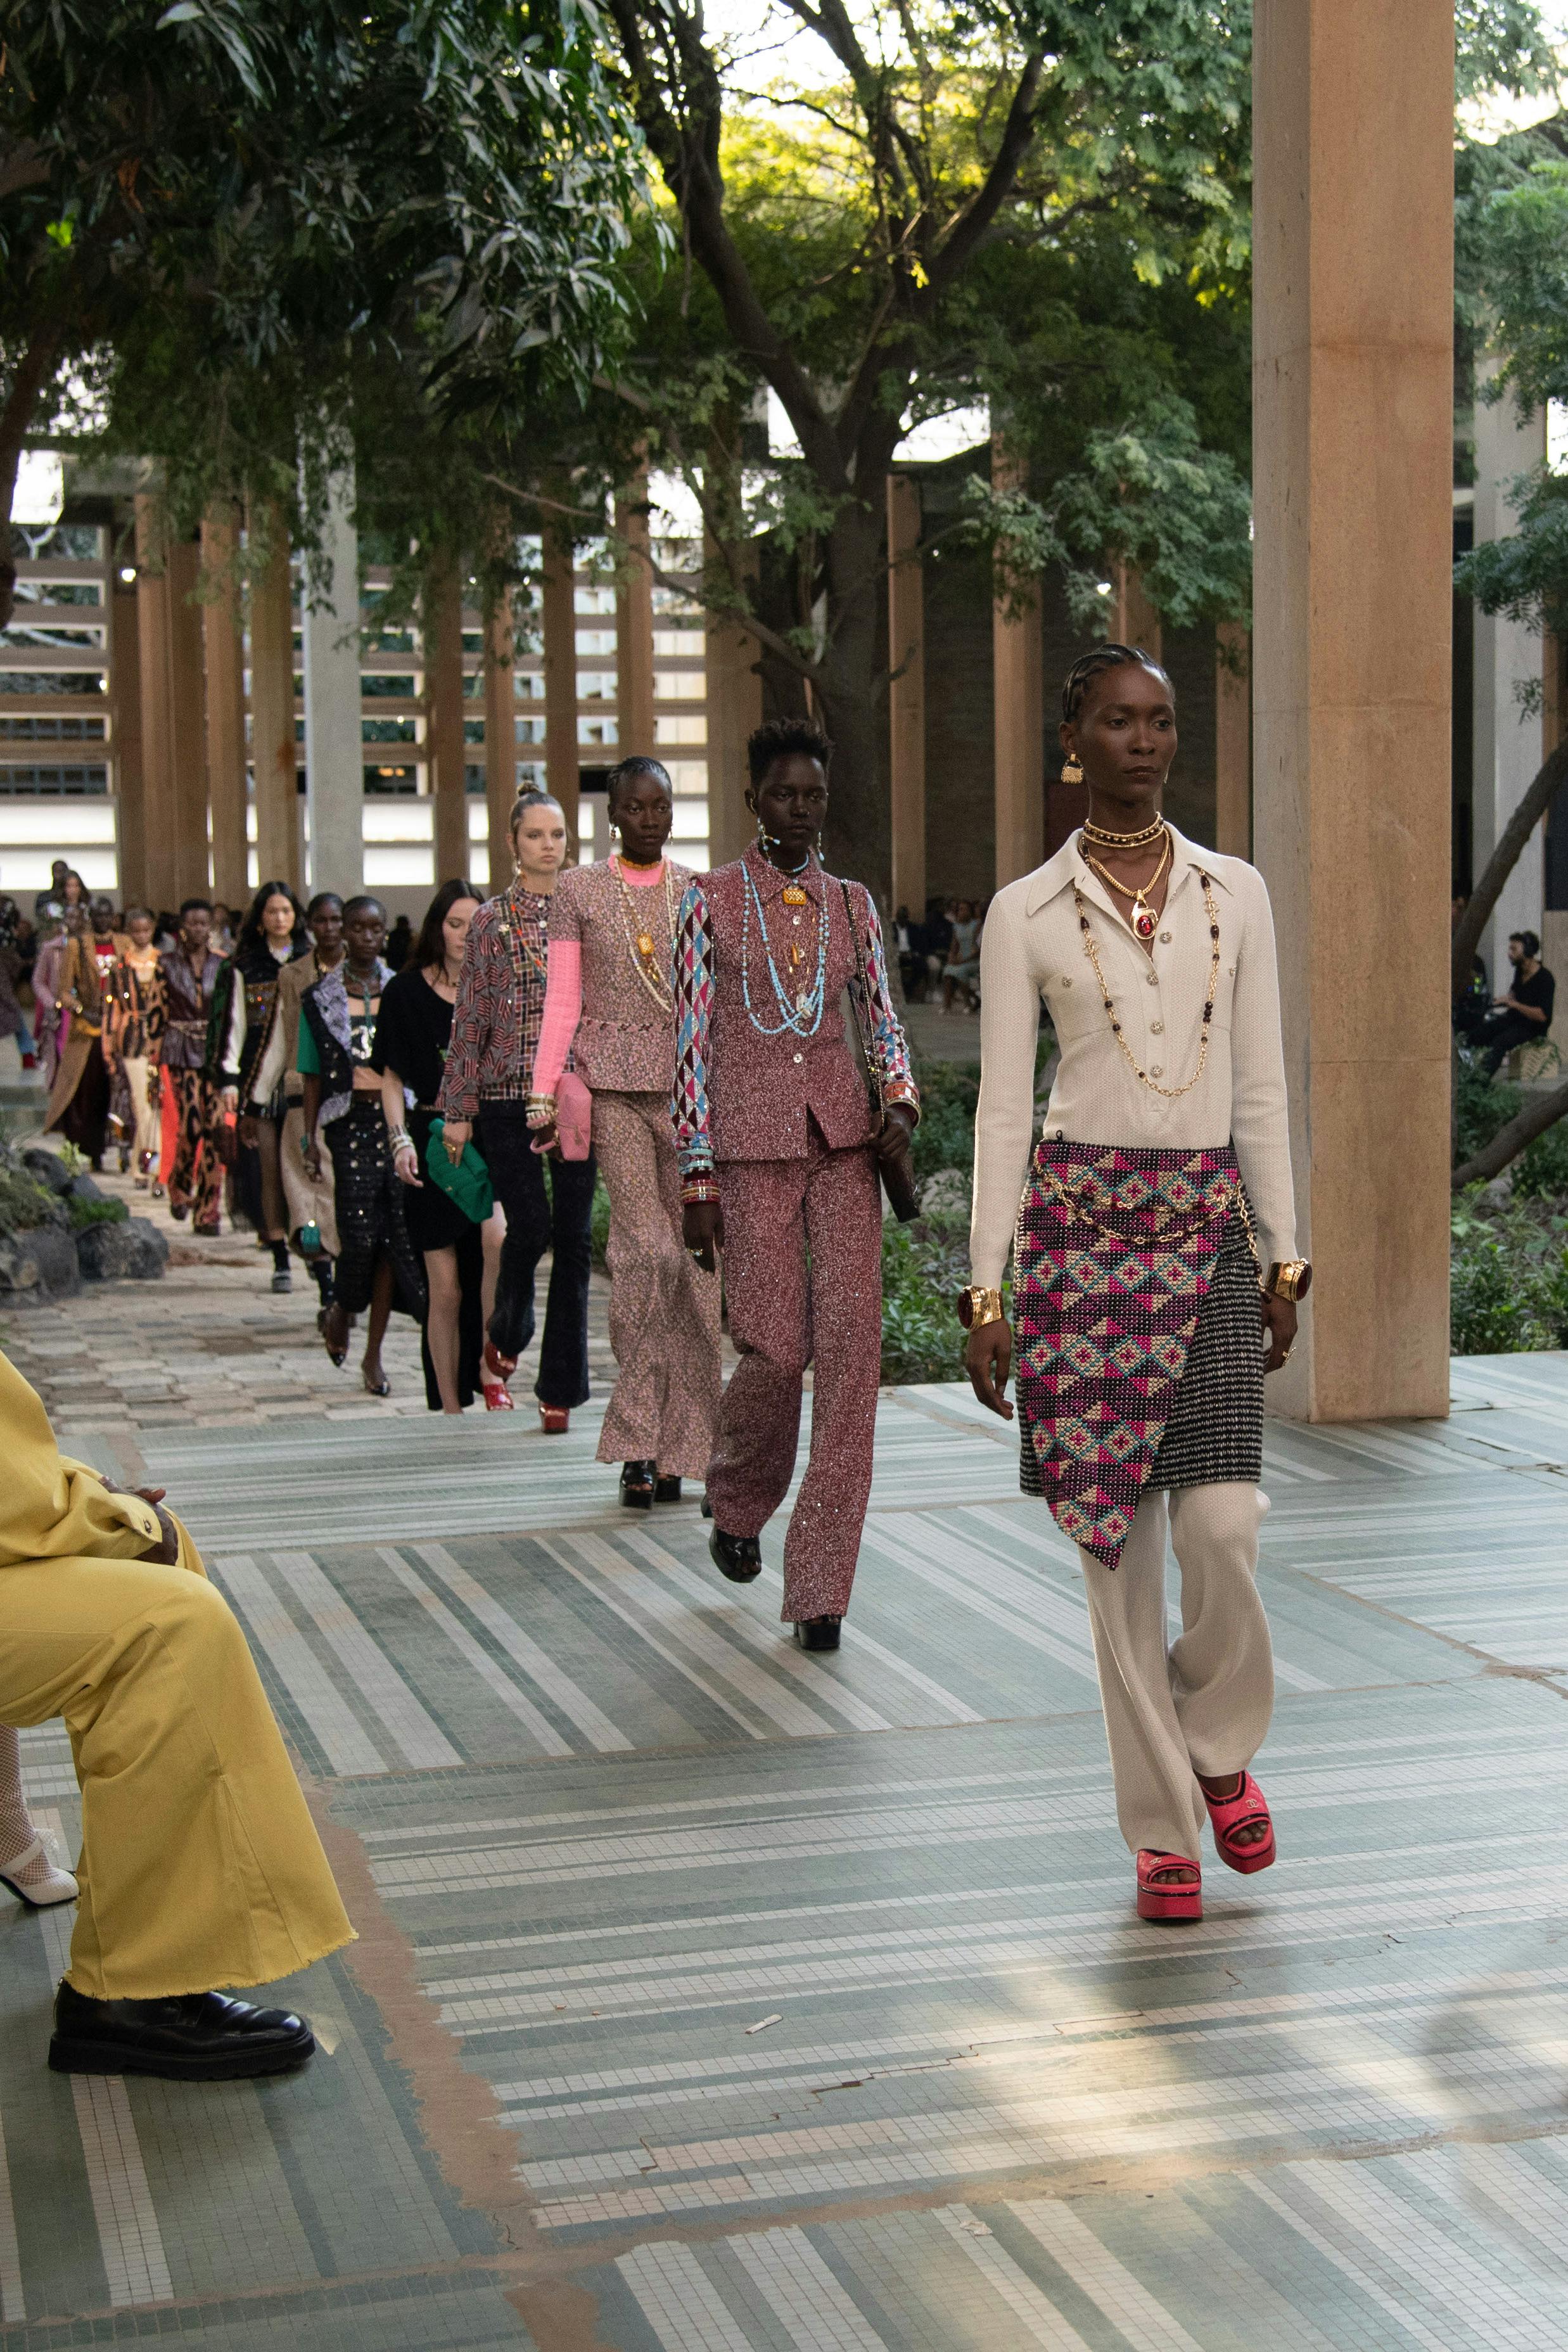 Chanel presents its Métiers d'art collection in Dakar